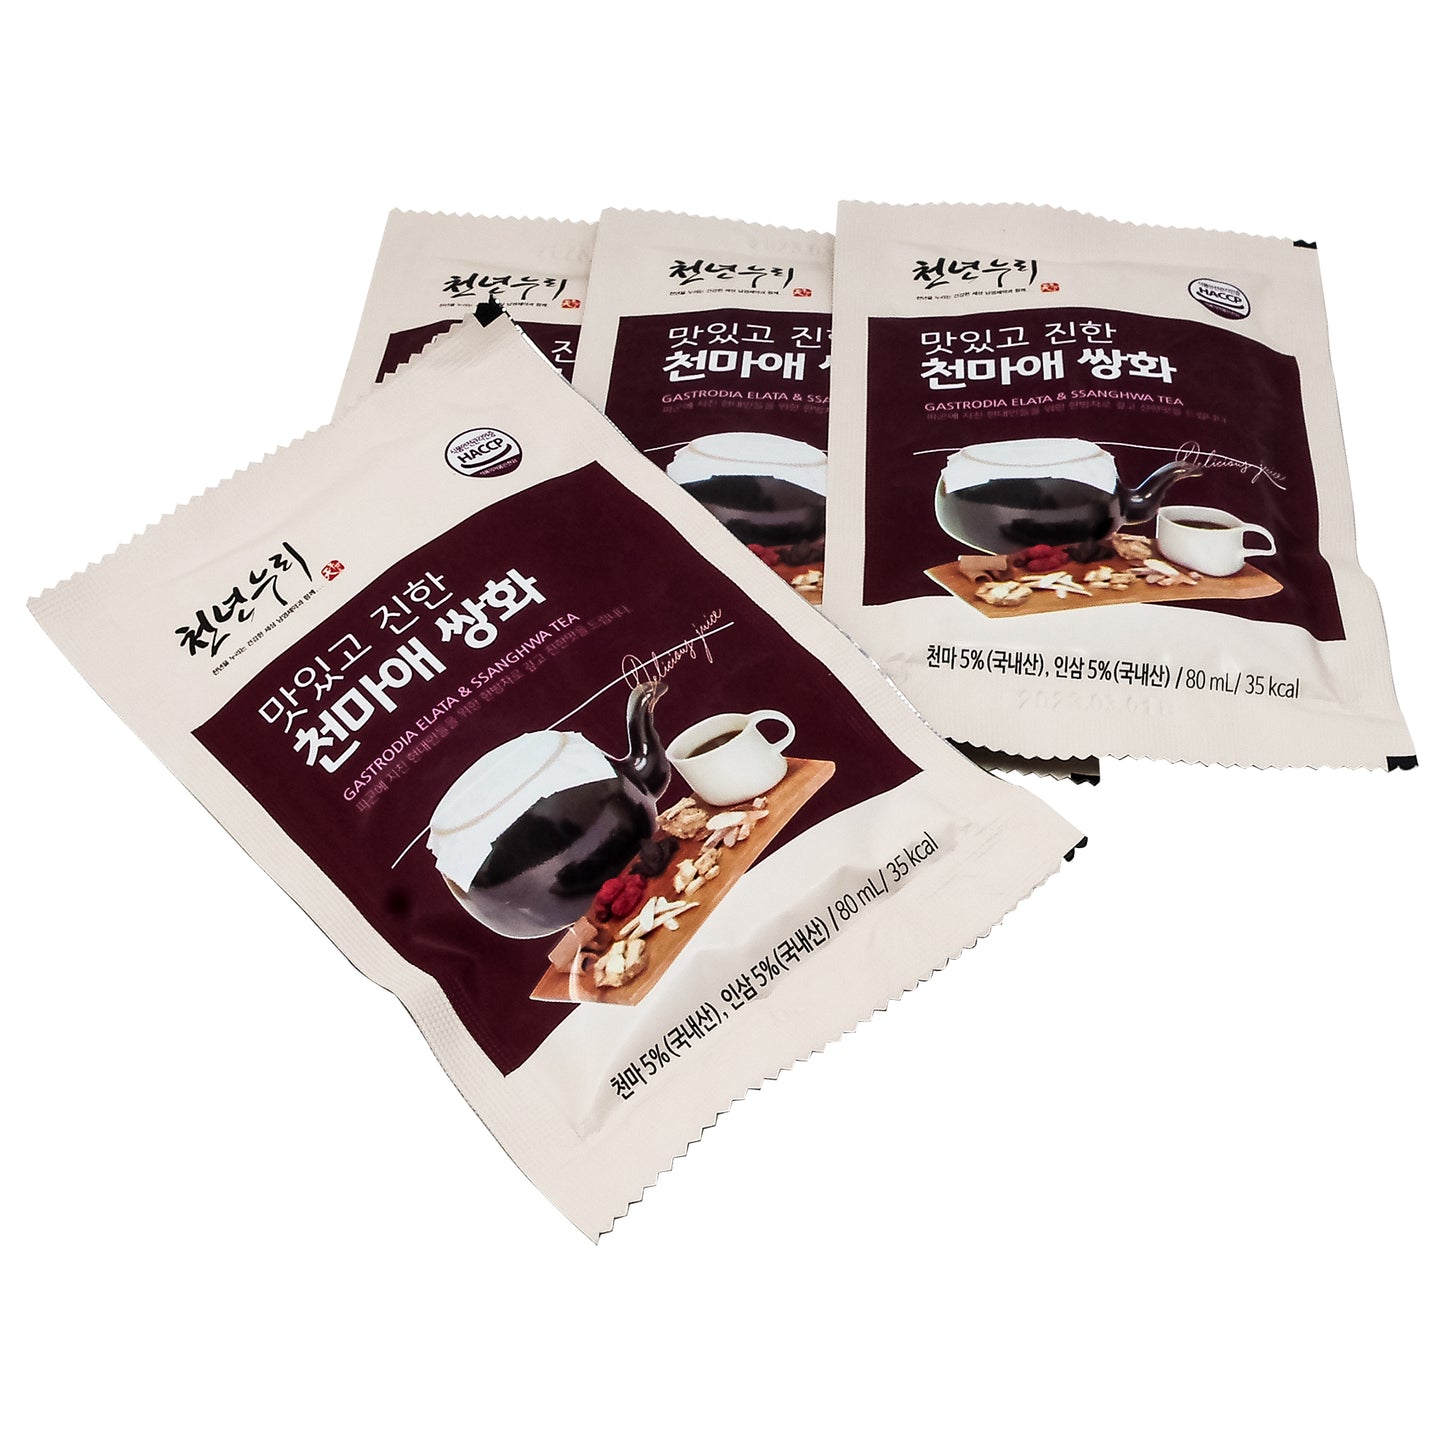 Korean Herbal Gastodia Elata & Ssanghwa Tea Beverage Juice 2.8oz x 30 packs 천마애 쌍화차 쥬스